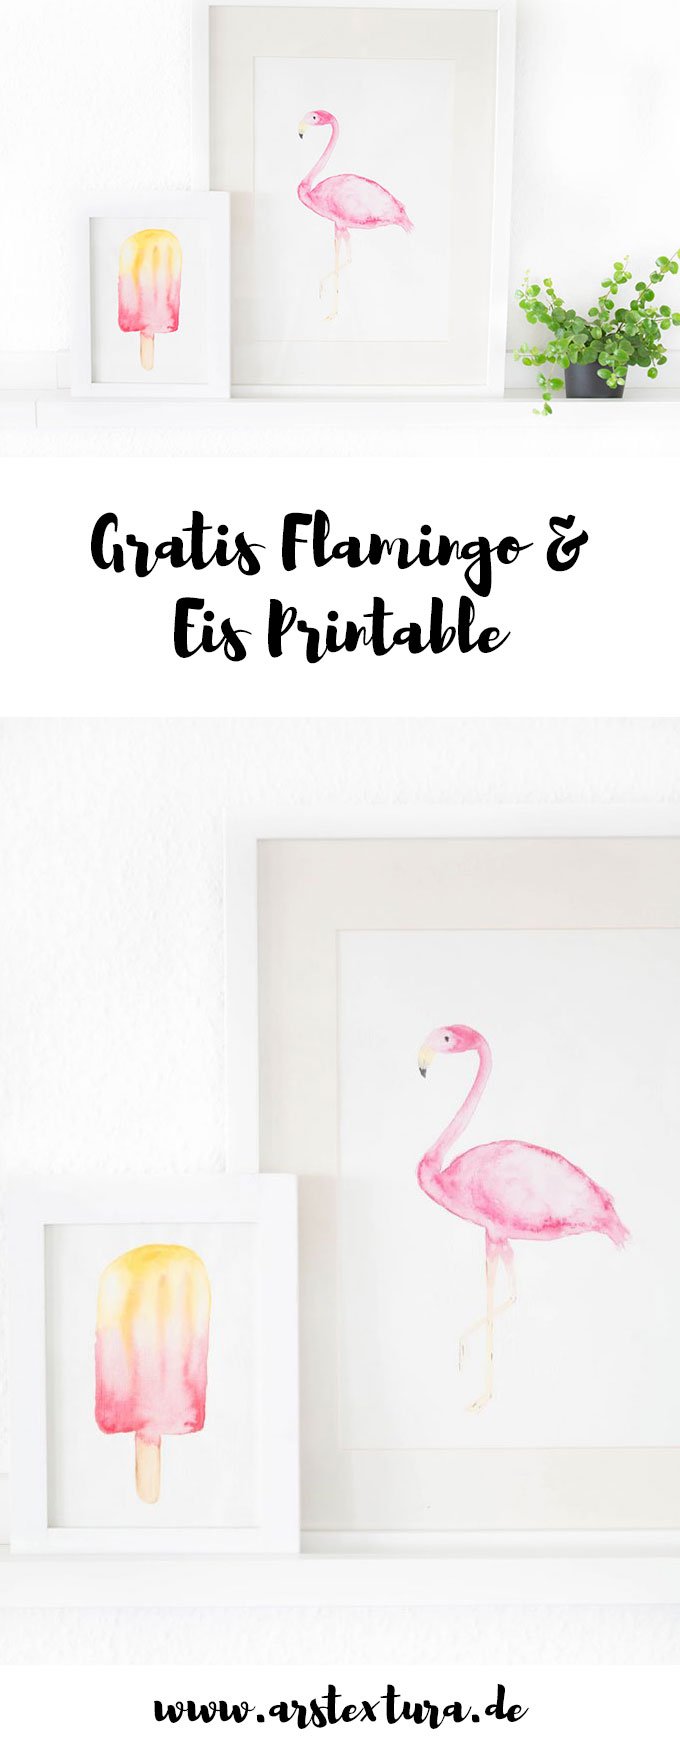 Gratis Flamingo und Eis Printable in Aquarell Malerei zum download